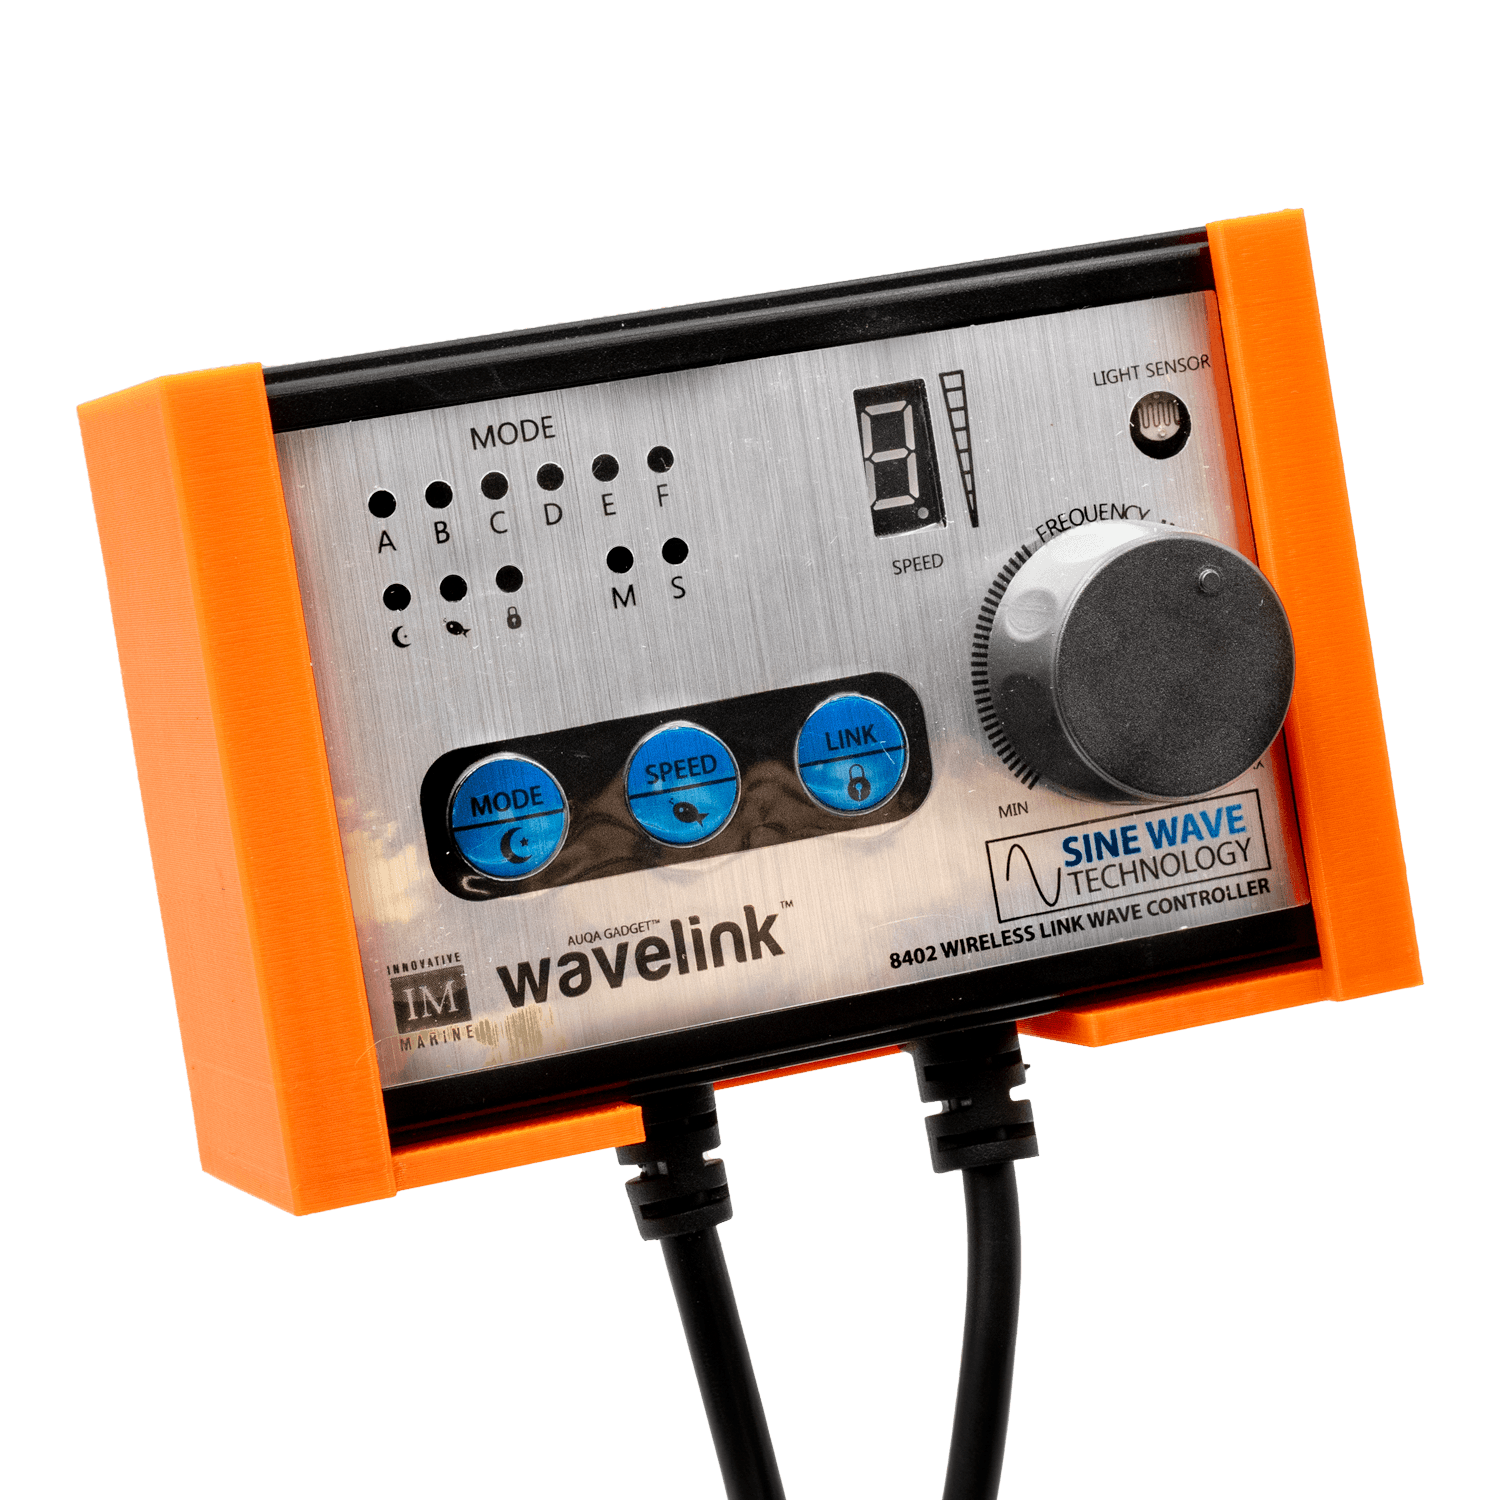 8402 Wireless Link Wave Controller Mount Bracket - Printed Reef